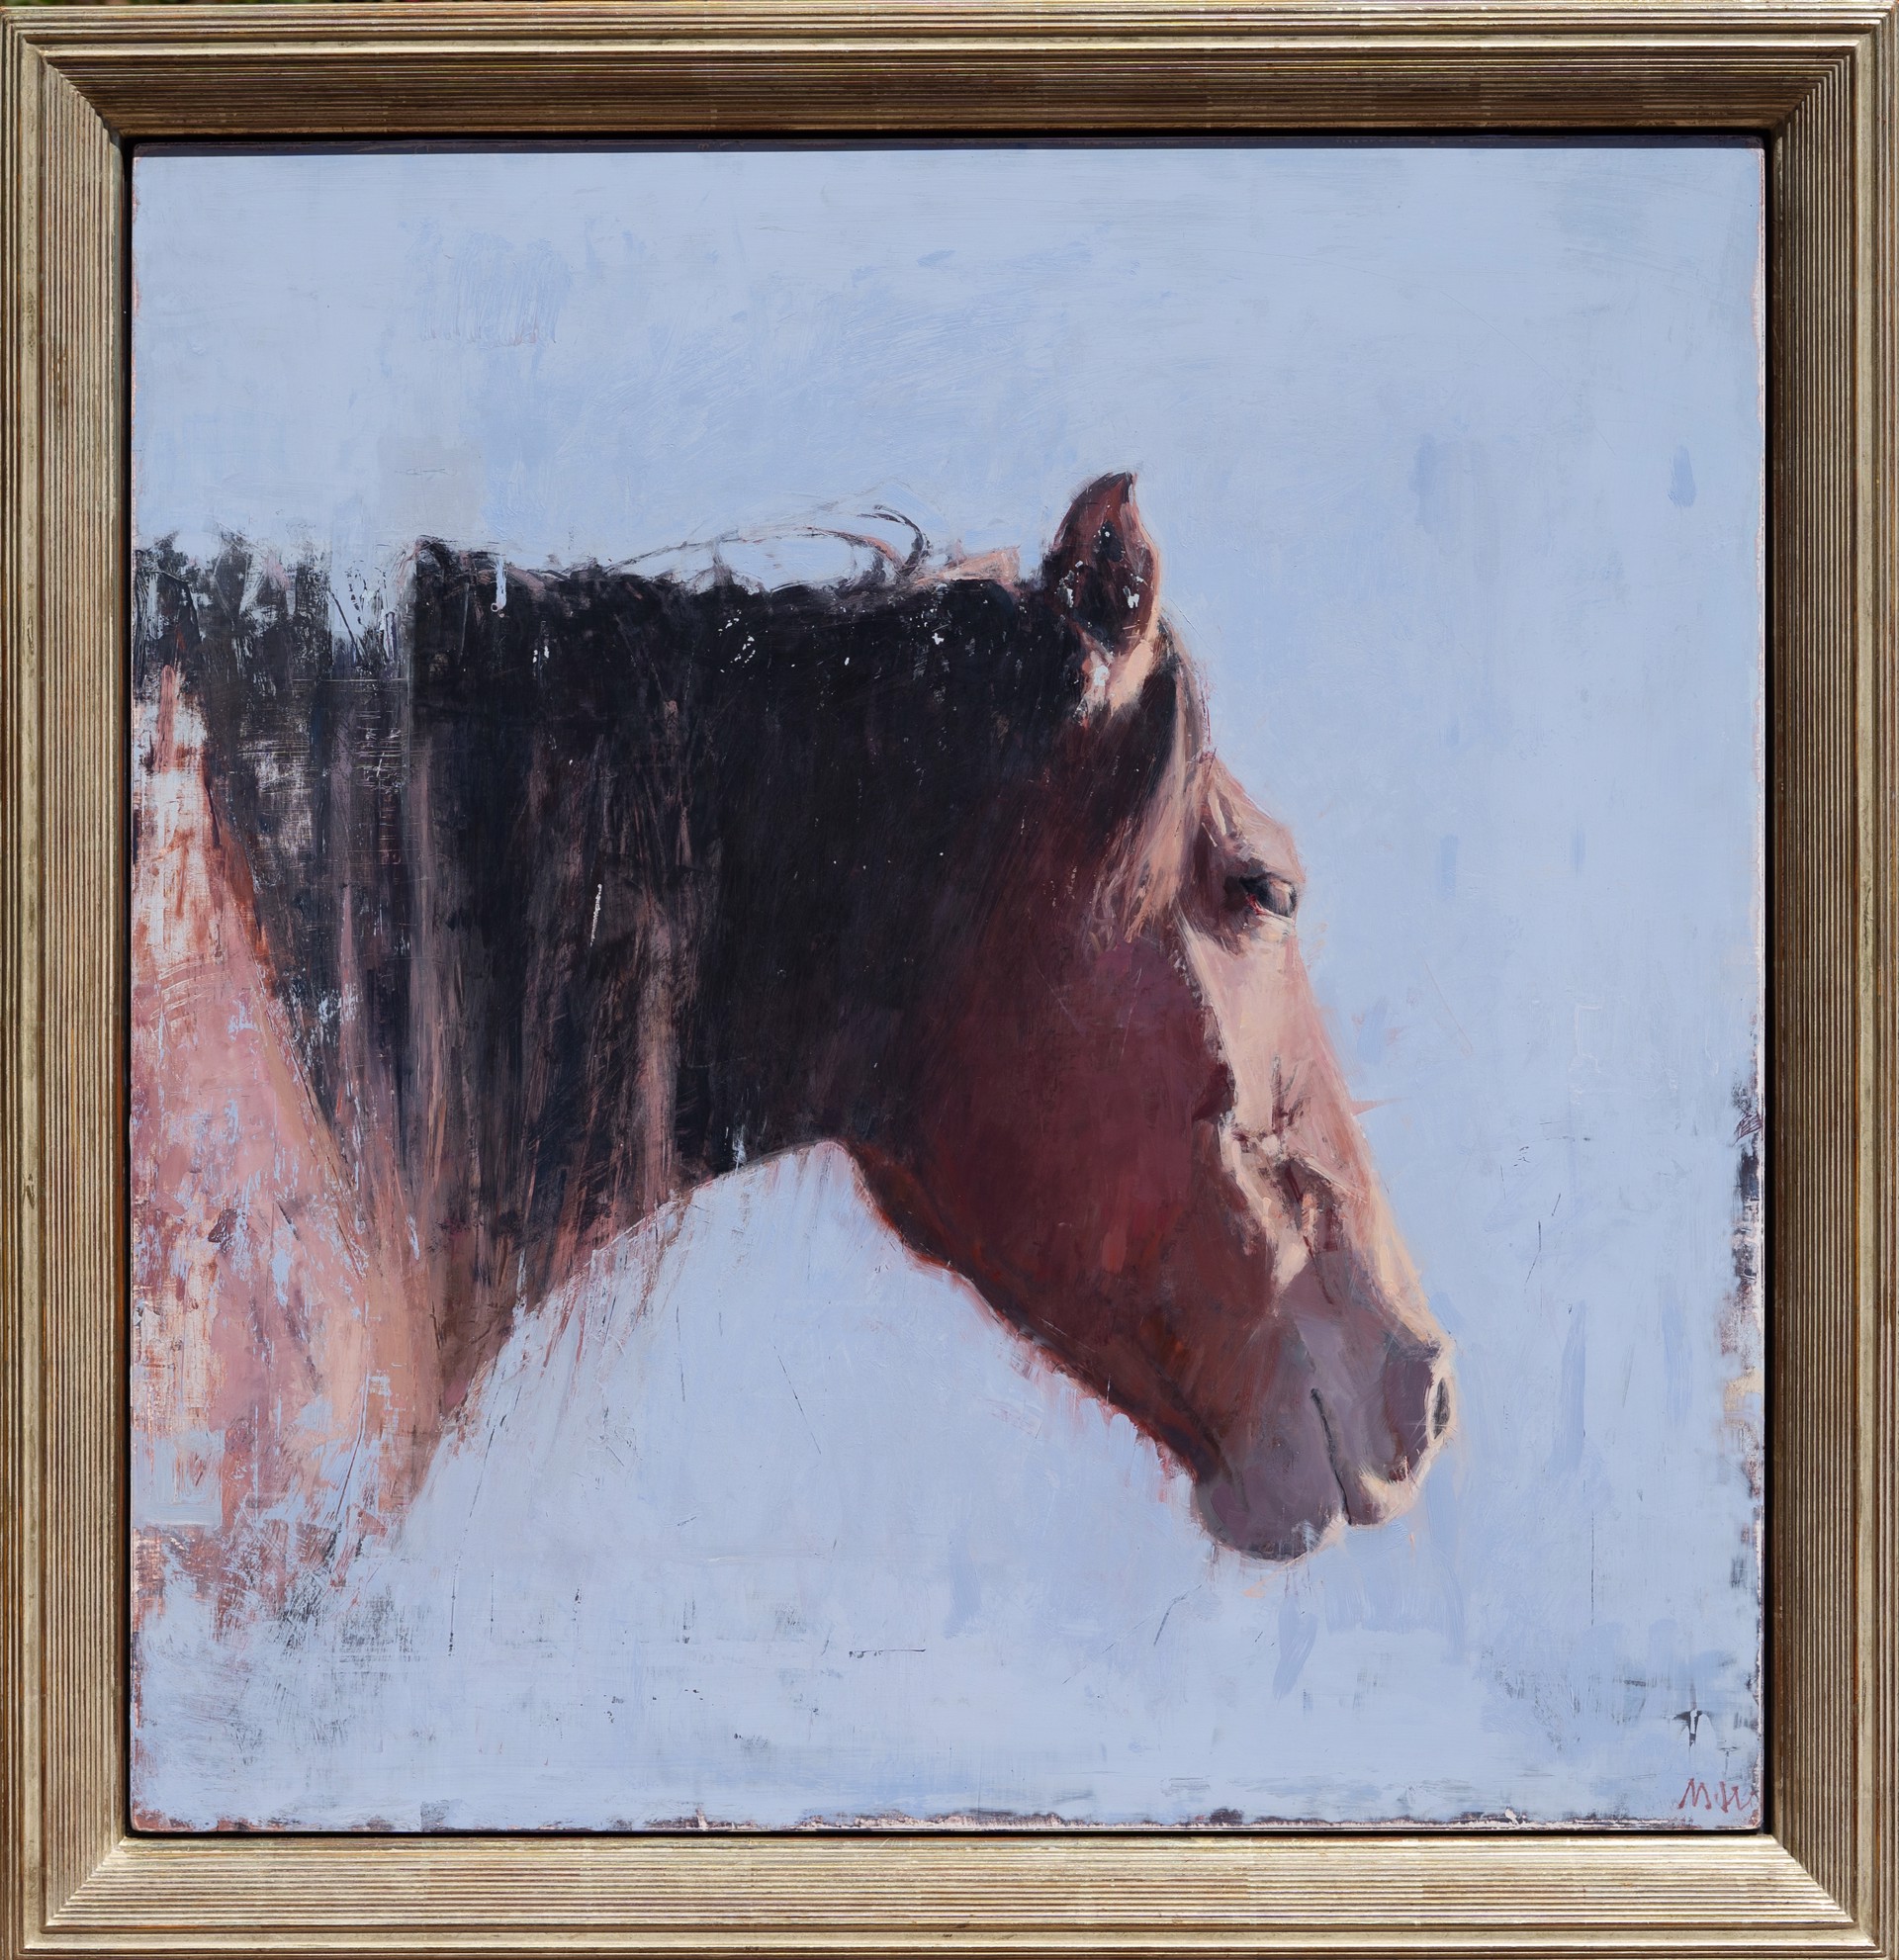 Wild Horses by Michael Workman